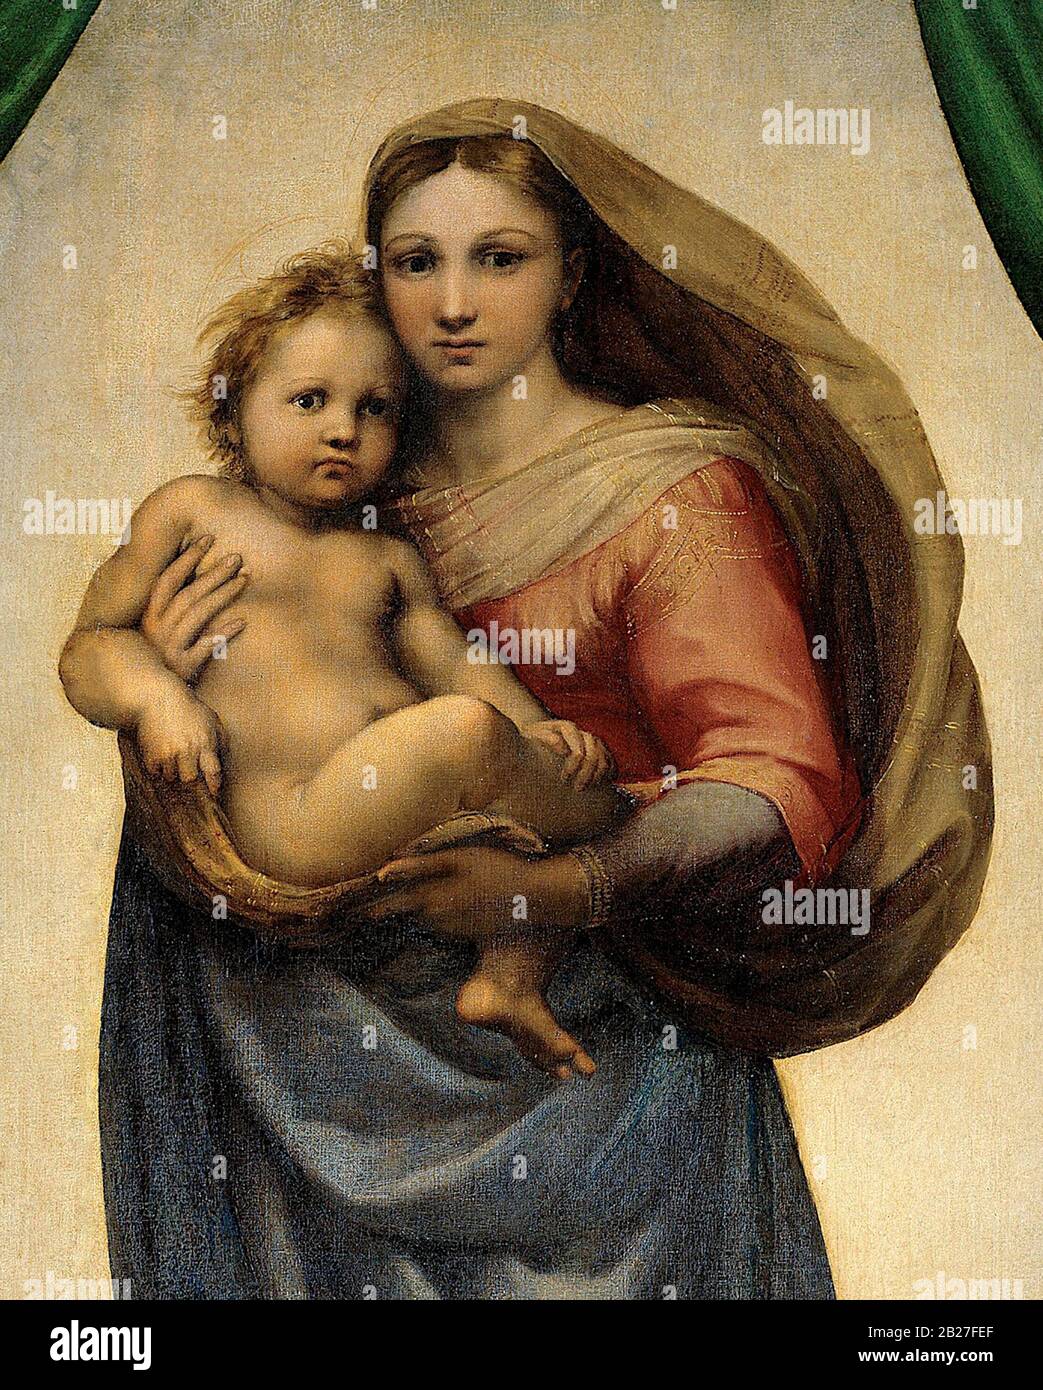 The Sistine Madonna (Madonna di San Sisto) 1512 (detail)  painting by Raphael (Raffaello Sanzio da Urbino)- Very high resolution and quality image Stock Photo